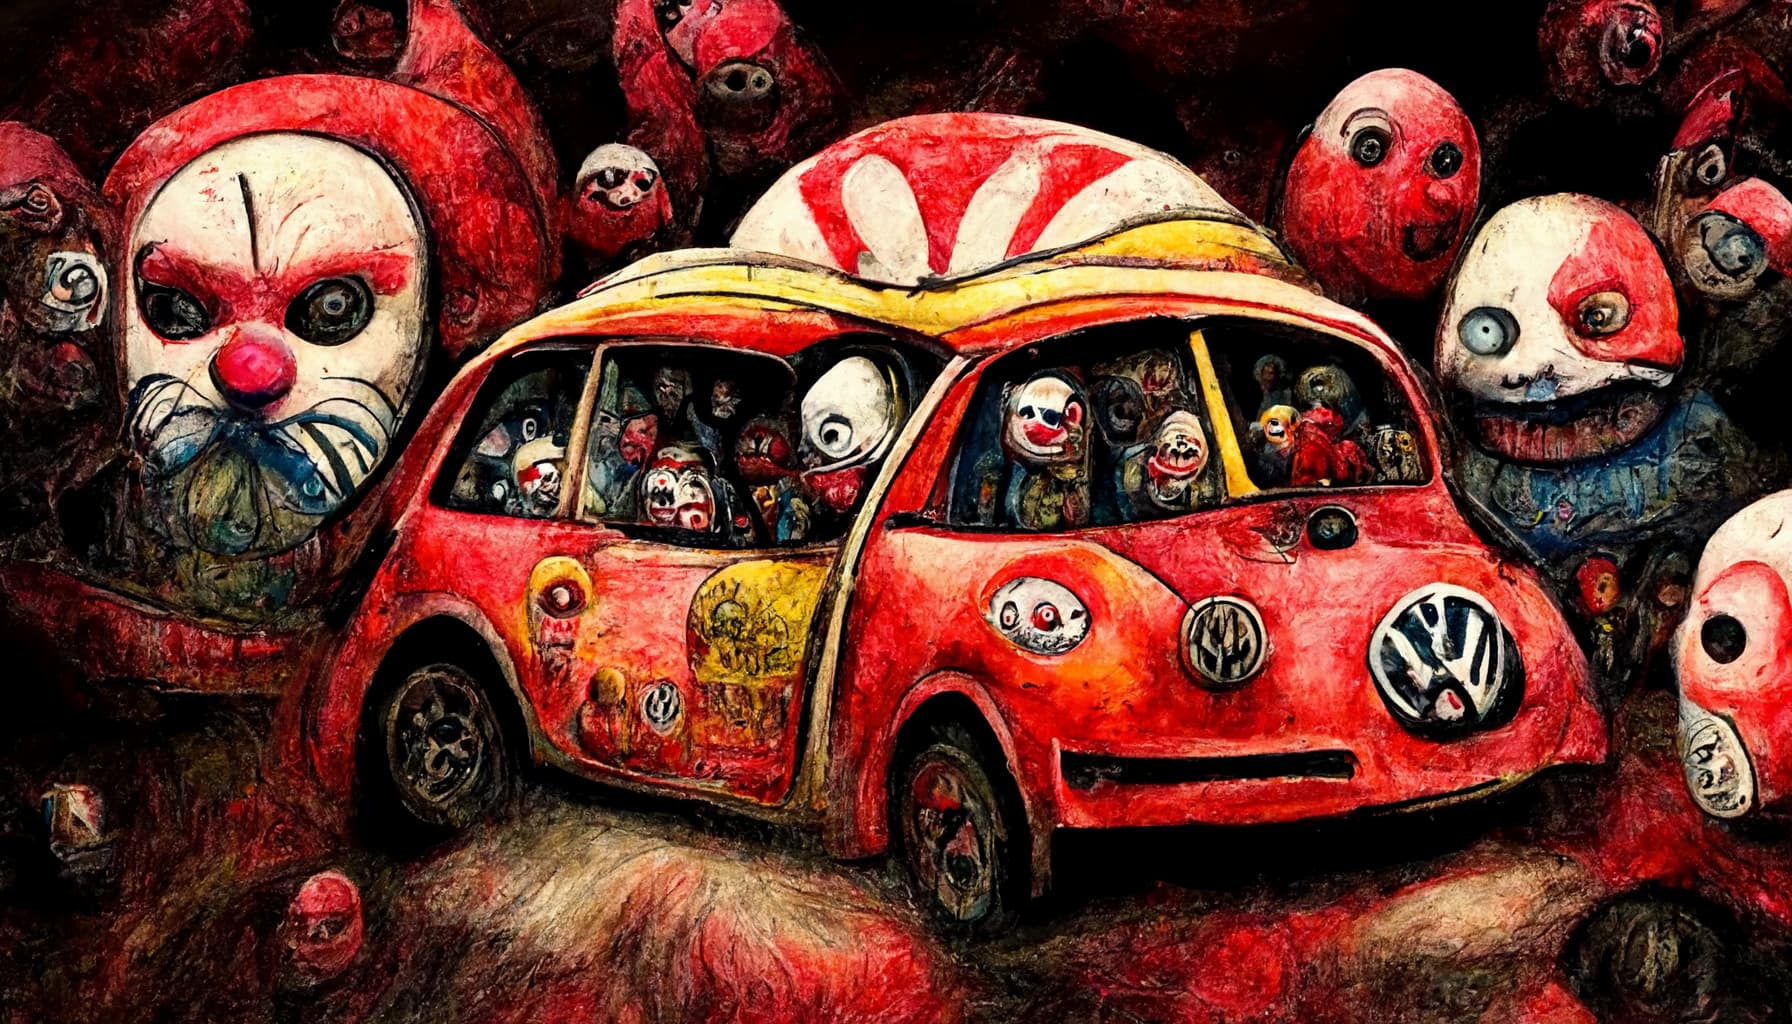 AI image clown car small bright red VW bug full of clown